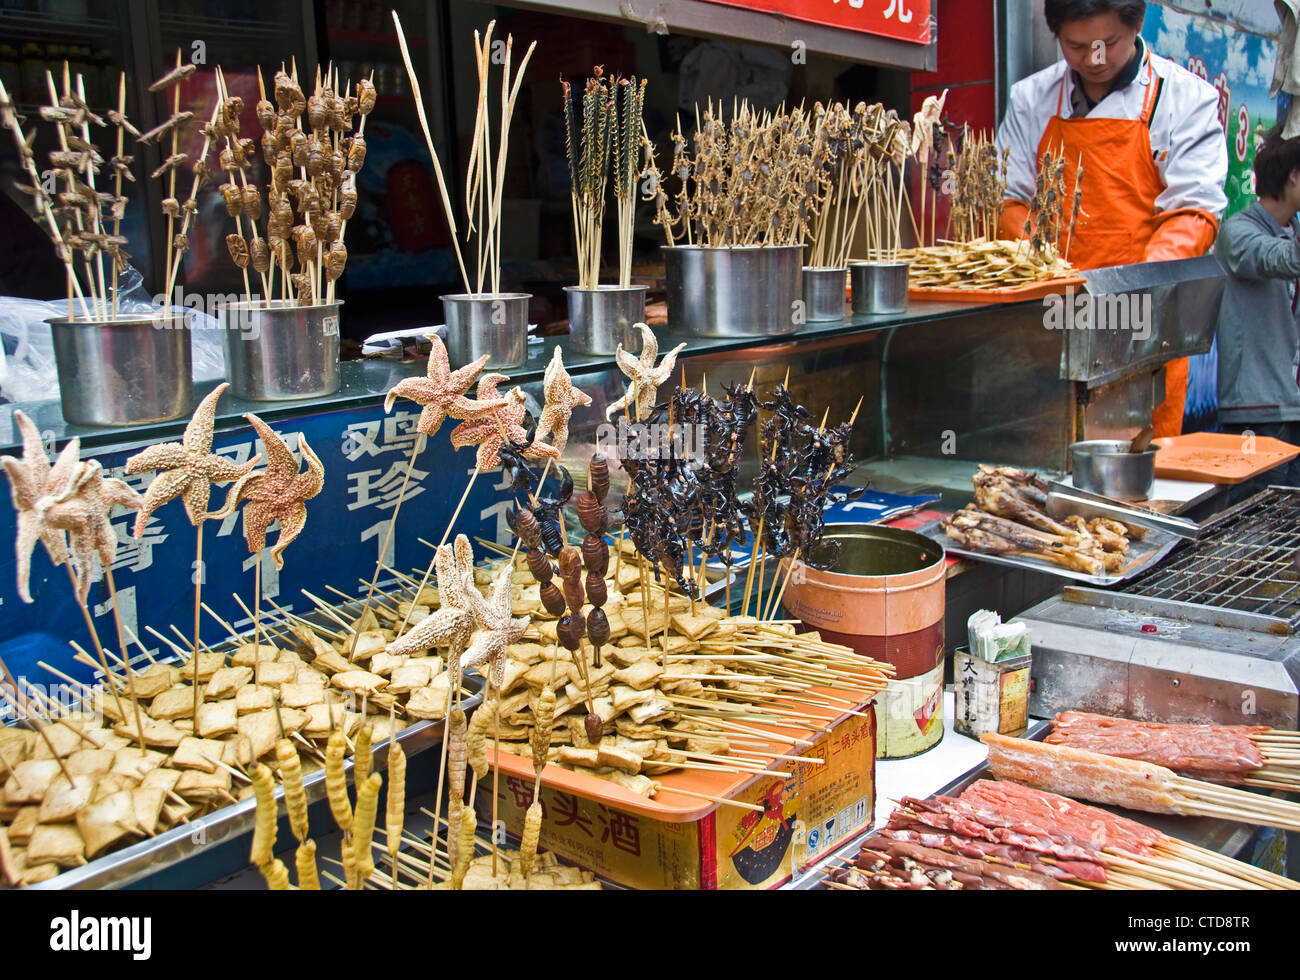 Fried insects, bugs, scorpions, starfishes on sticks at Wangfujing market street - Beijing, China Stock Photo